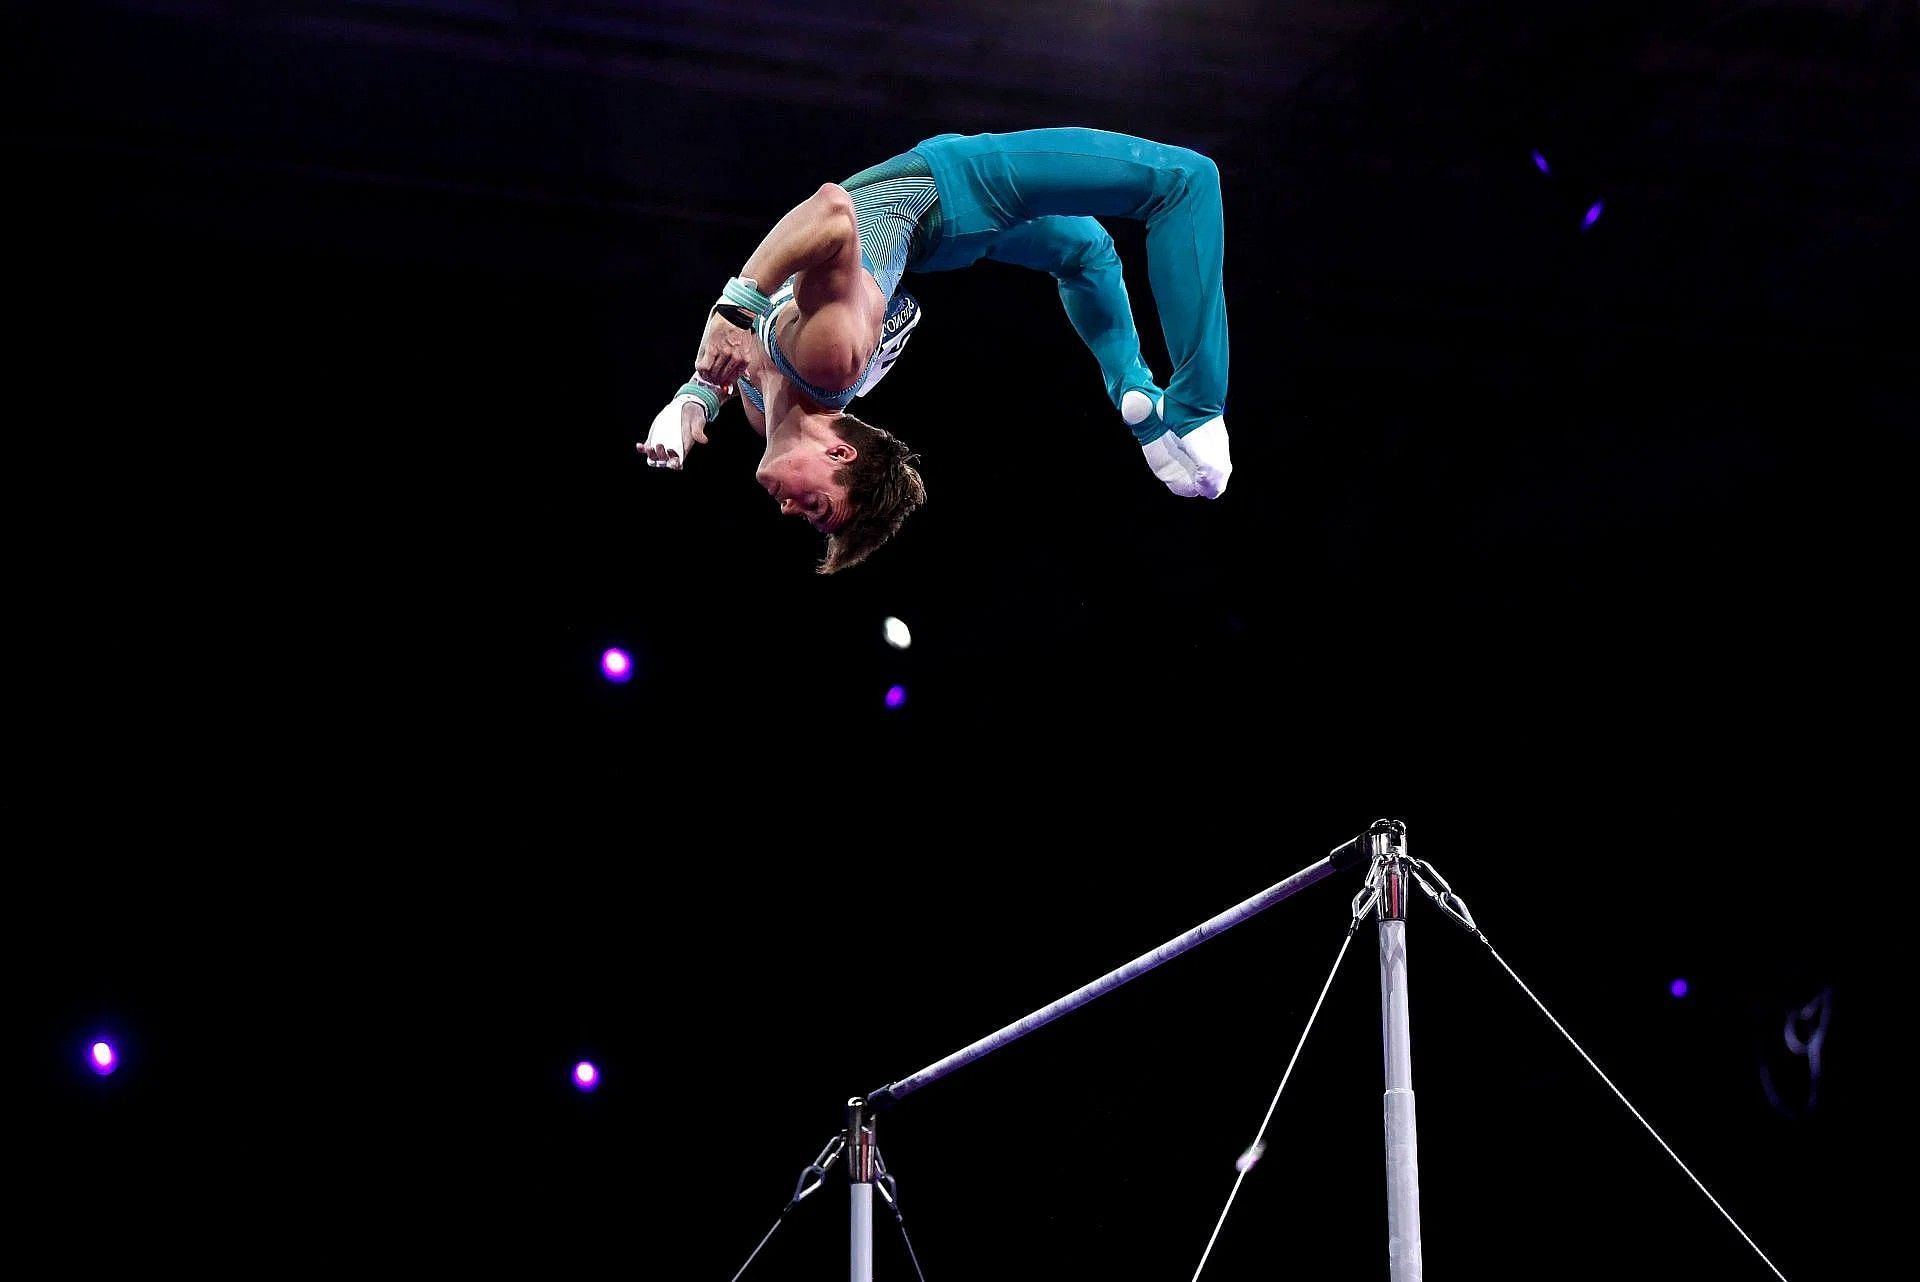 World Artistic Gymnastics Championships 2022